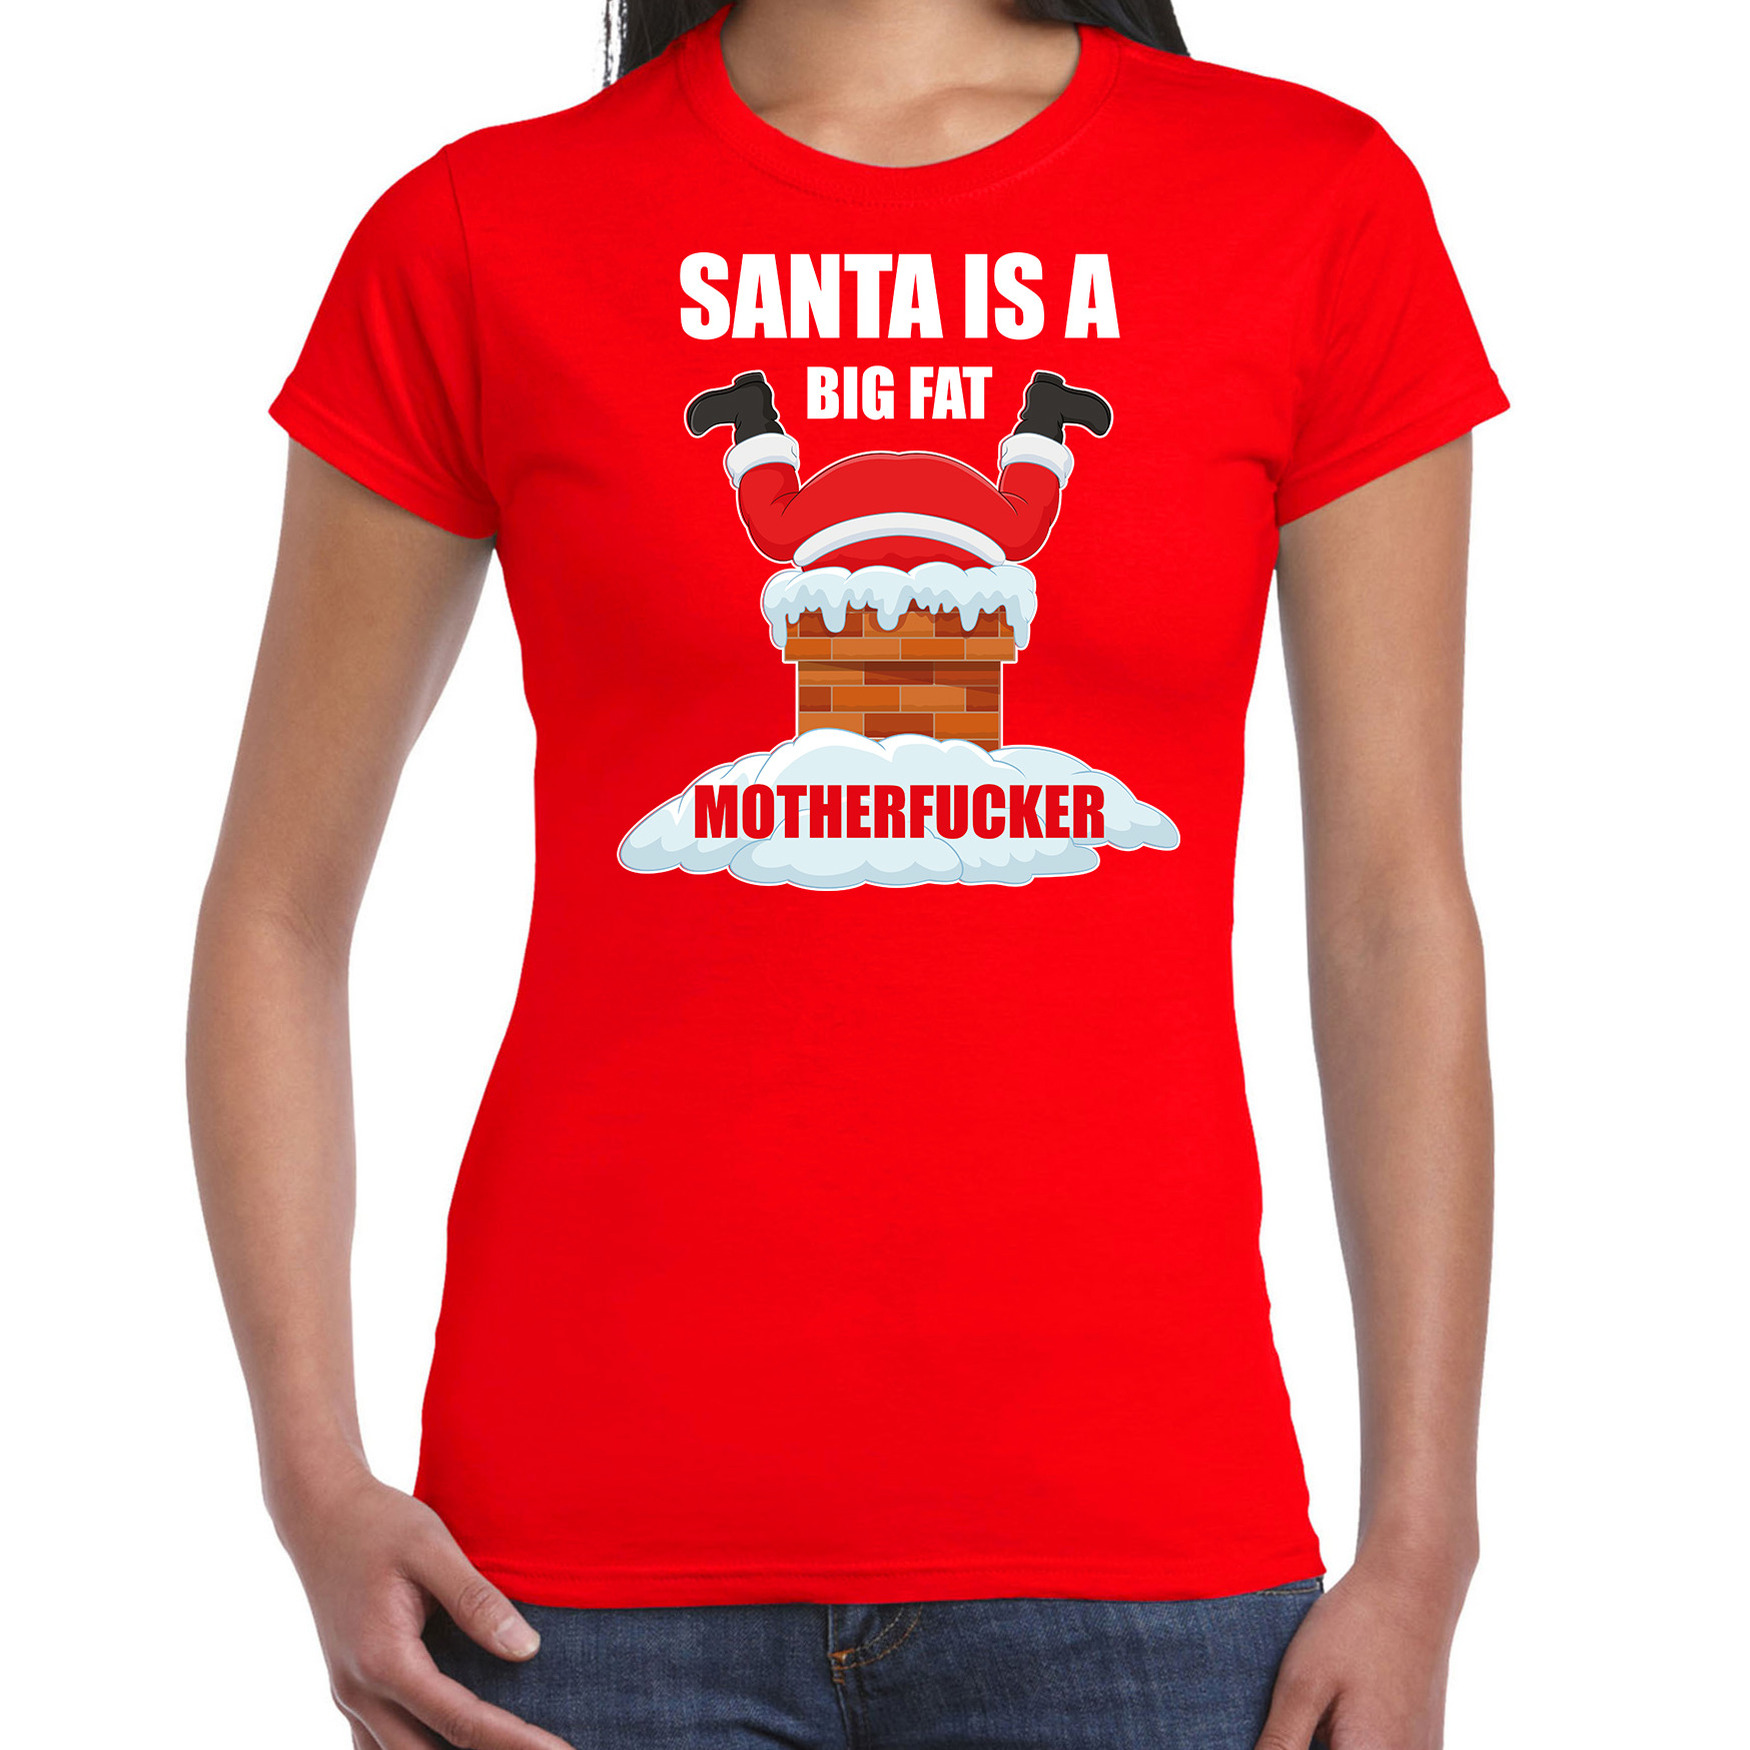 Rood Kerstshirt-Kerstkleding Santa is a big fat motherfucker voor dames